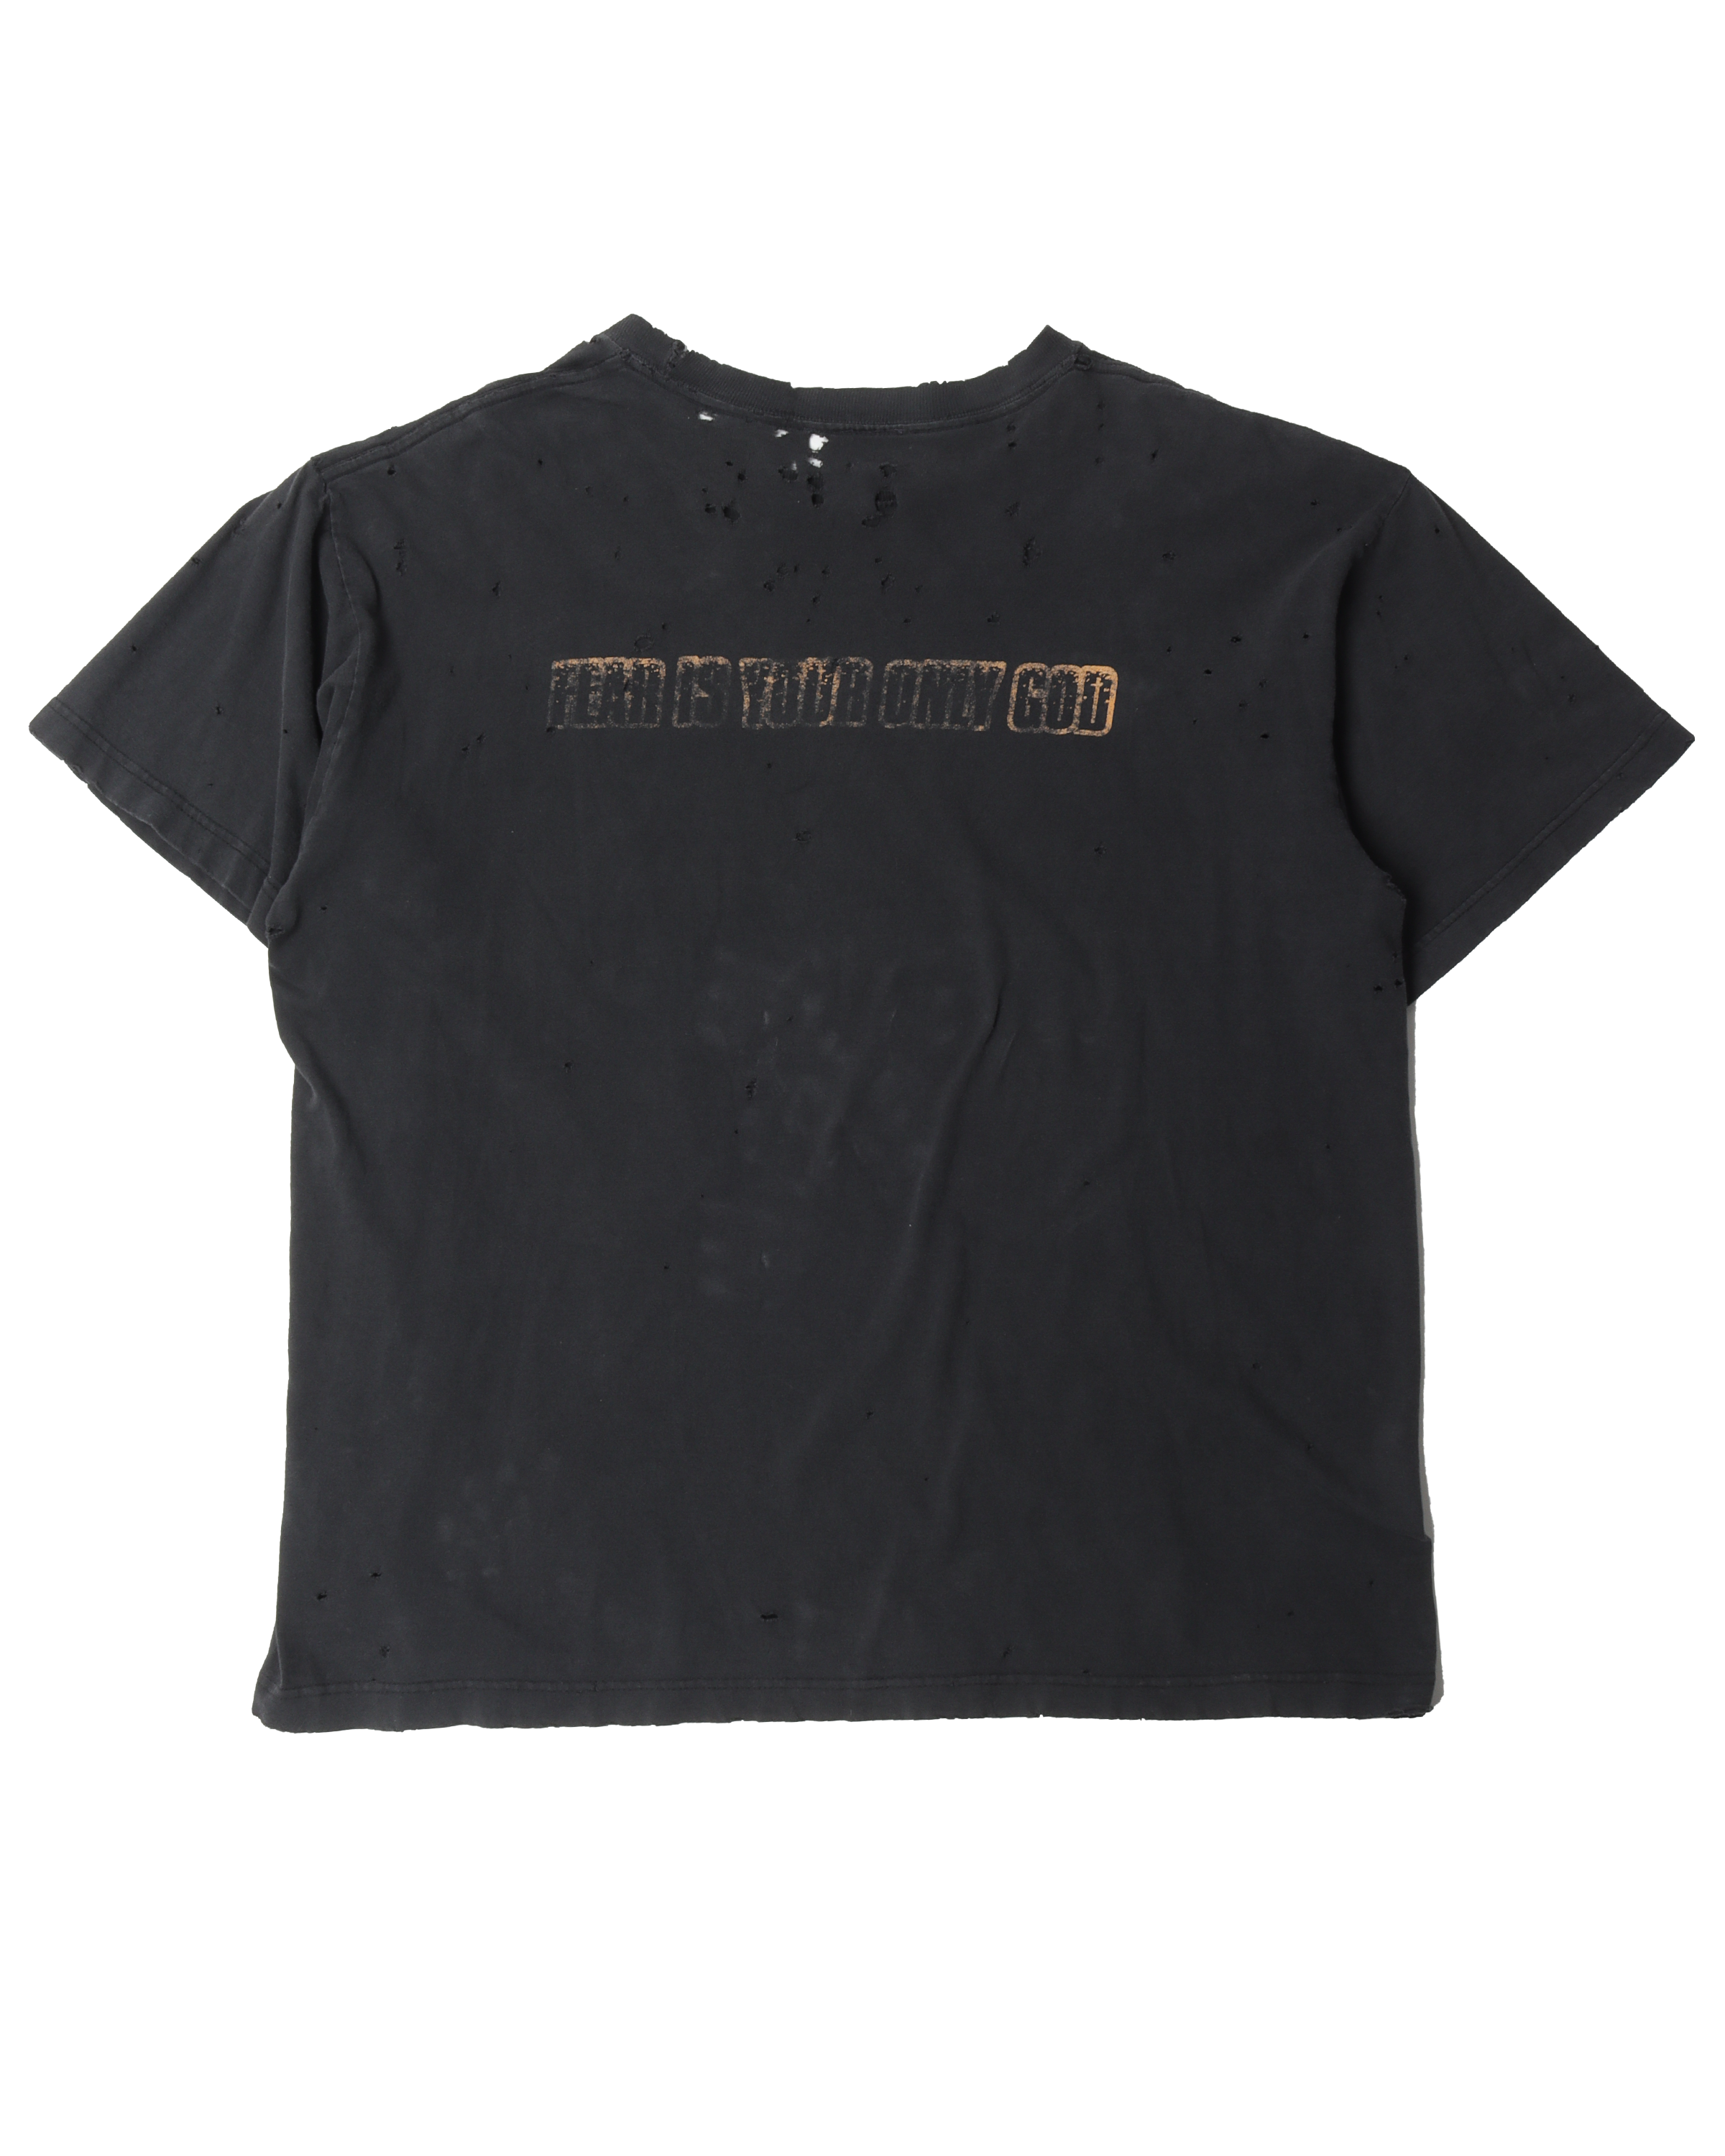 Rage Against The Machine "Evil Empire" T-Shirt